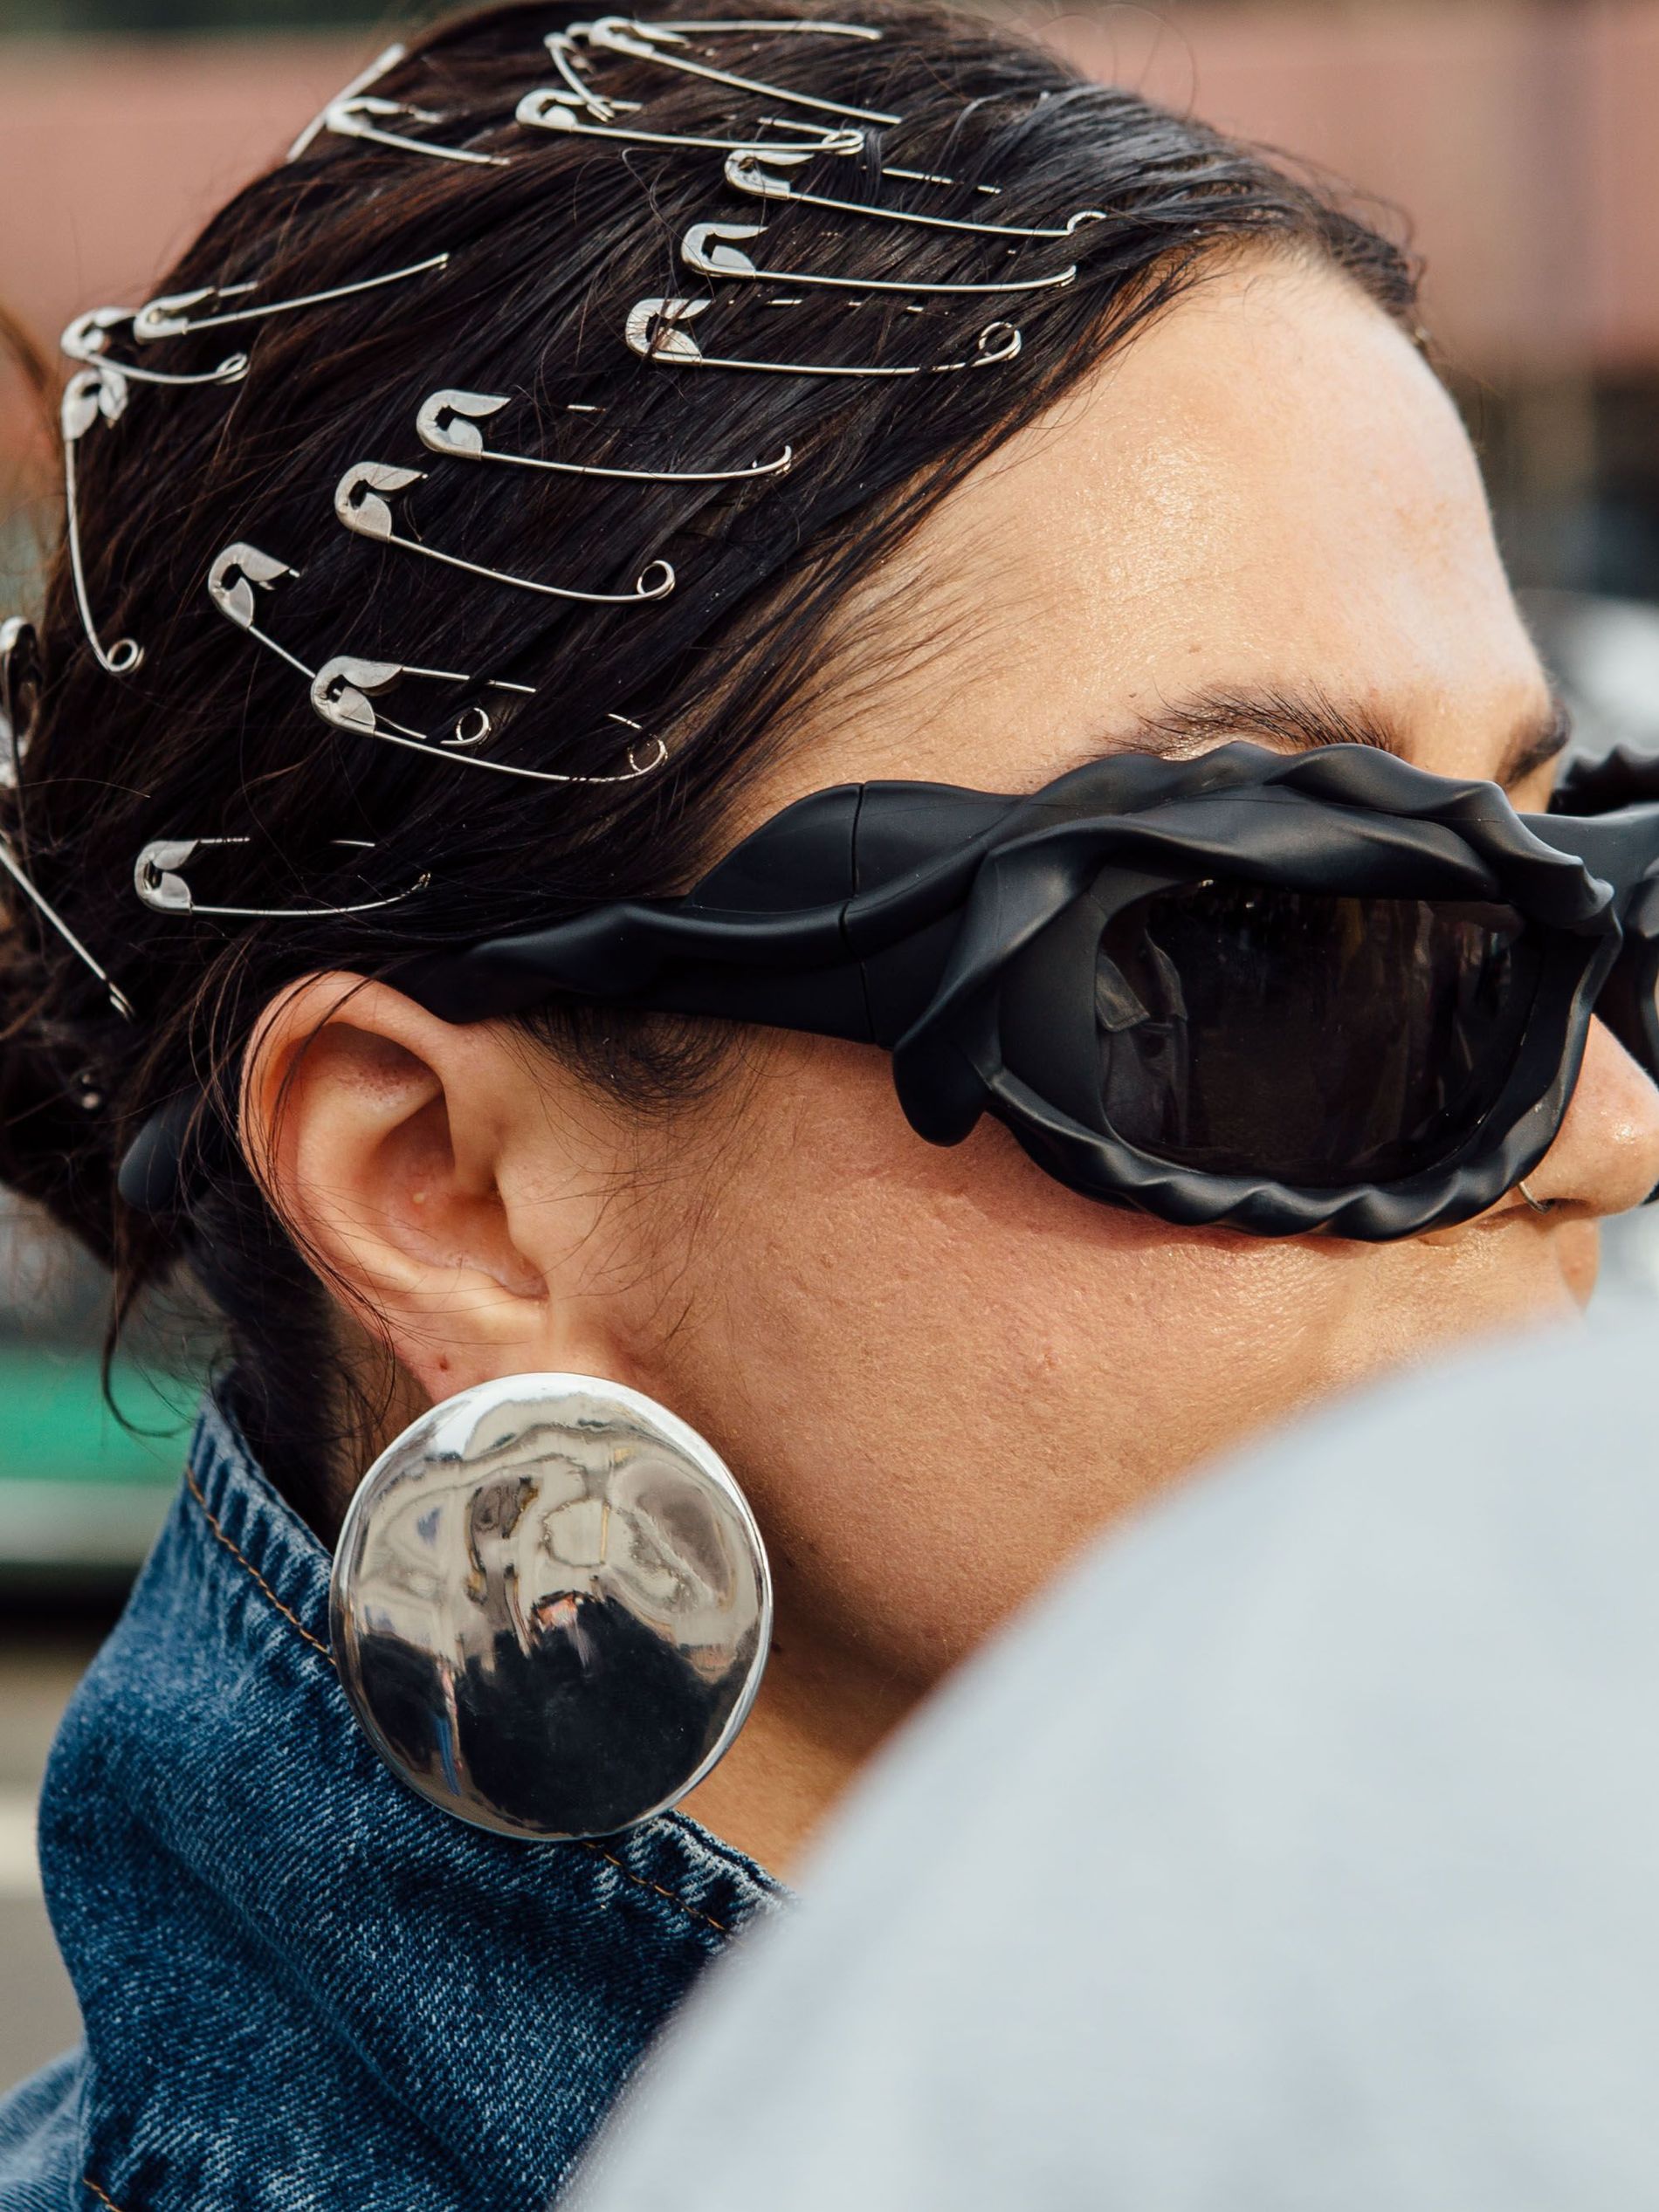 Copenhagen Fashion Week guest wears safety pins attached to a slicked back bun